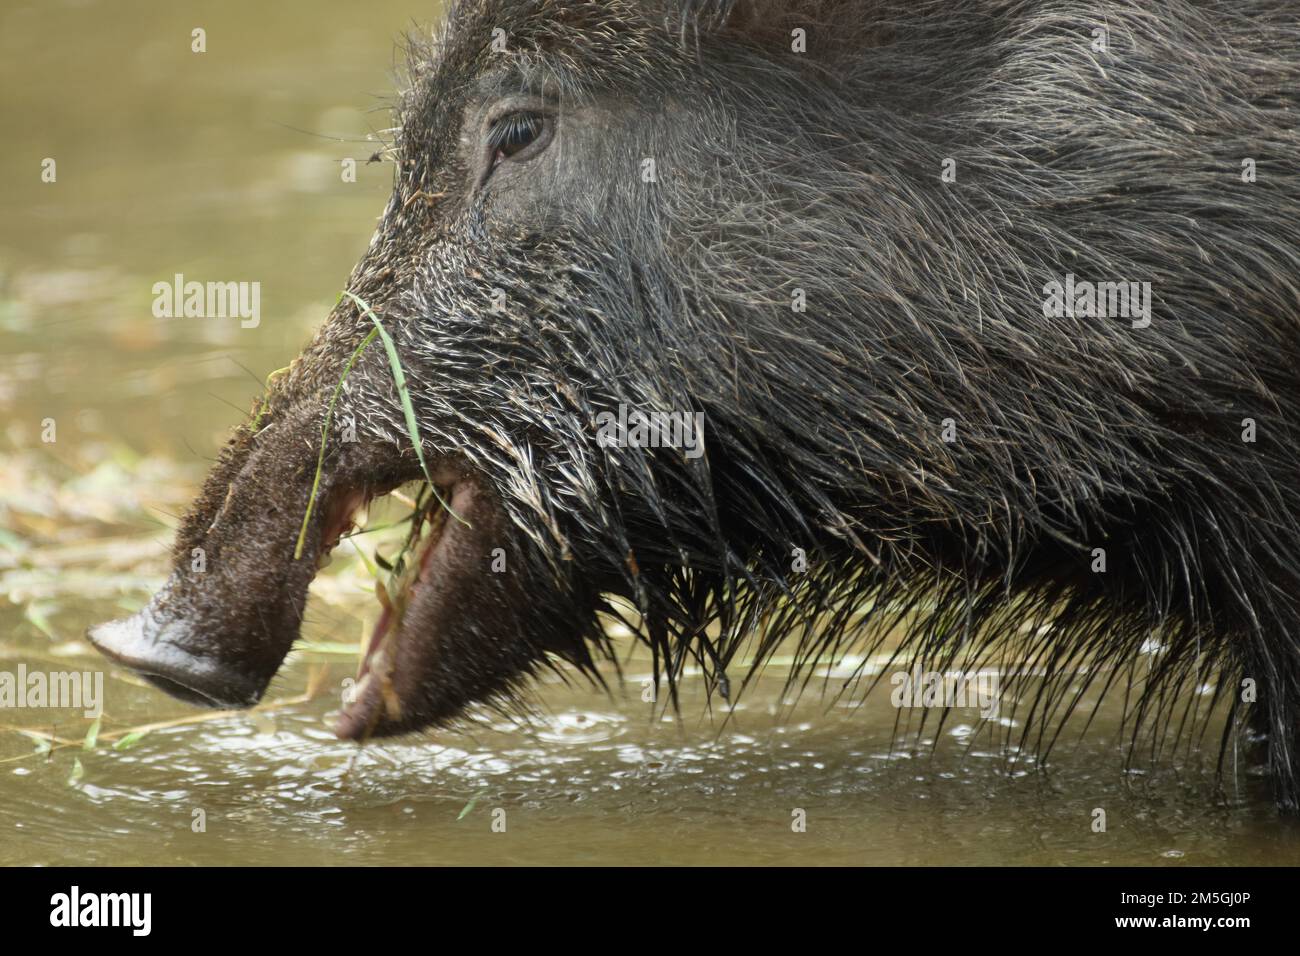 https://c8.alamy.com/comp/2M5GJ0P/head-of-wild-boar-sus-scrofa-feeding-in-water-mouth-open-captive-2M5GJ0P.jpg